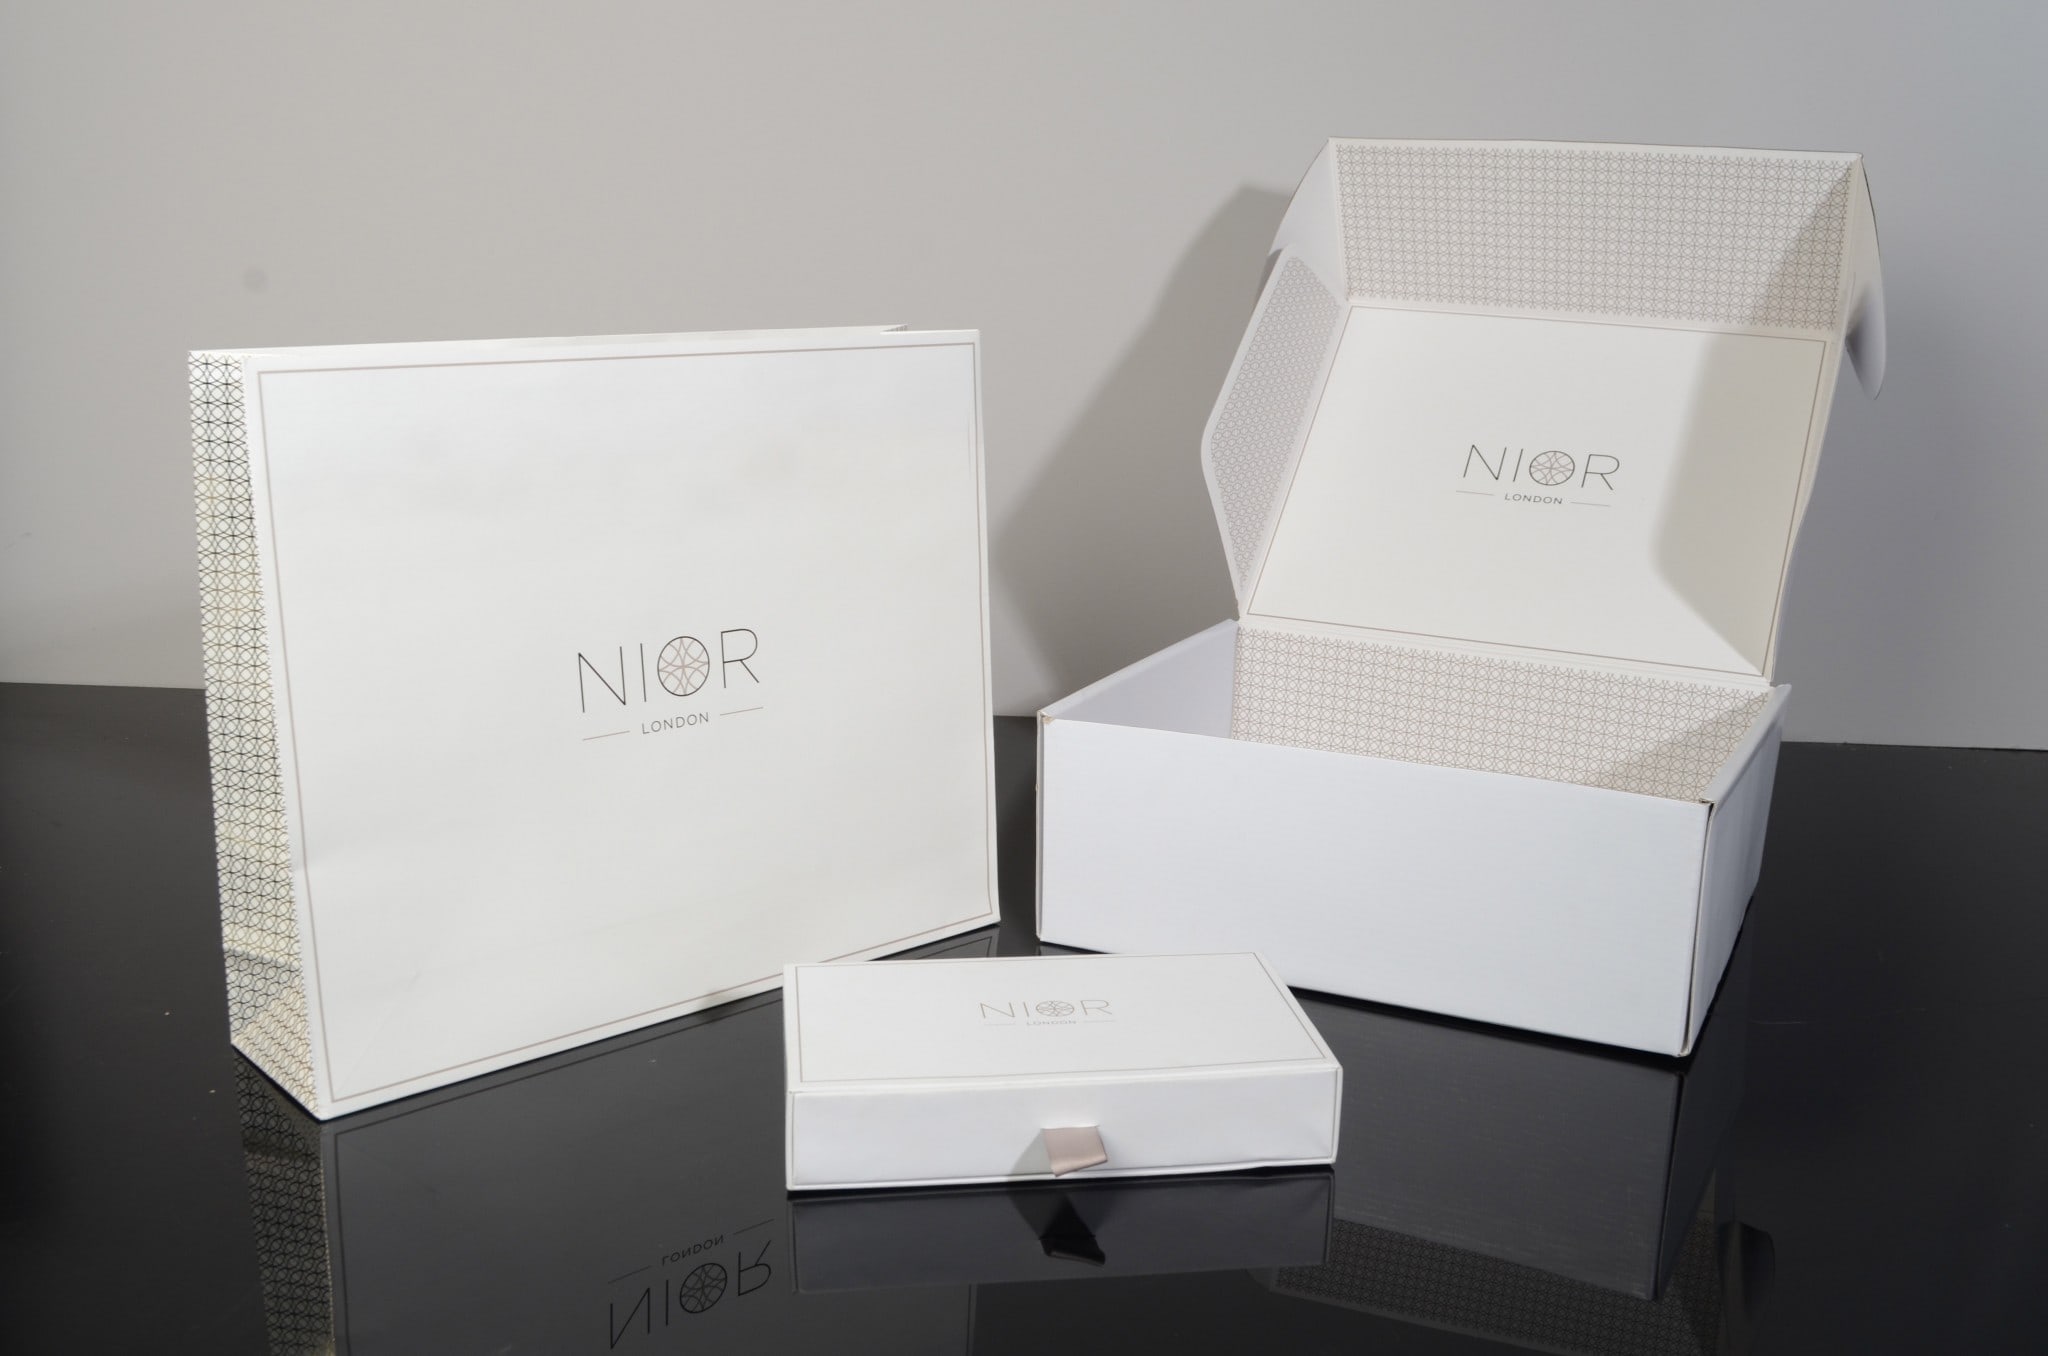 Nior Box packaging